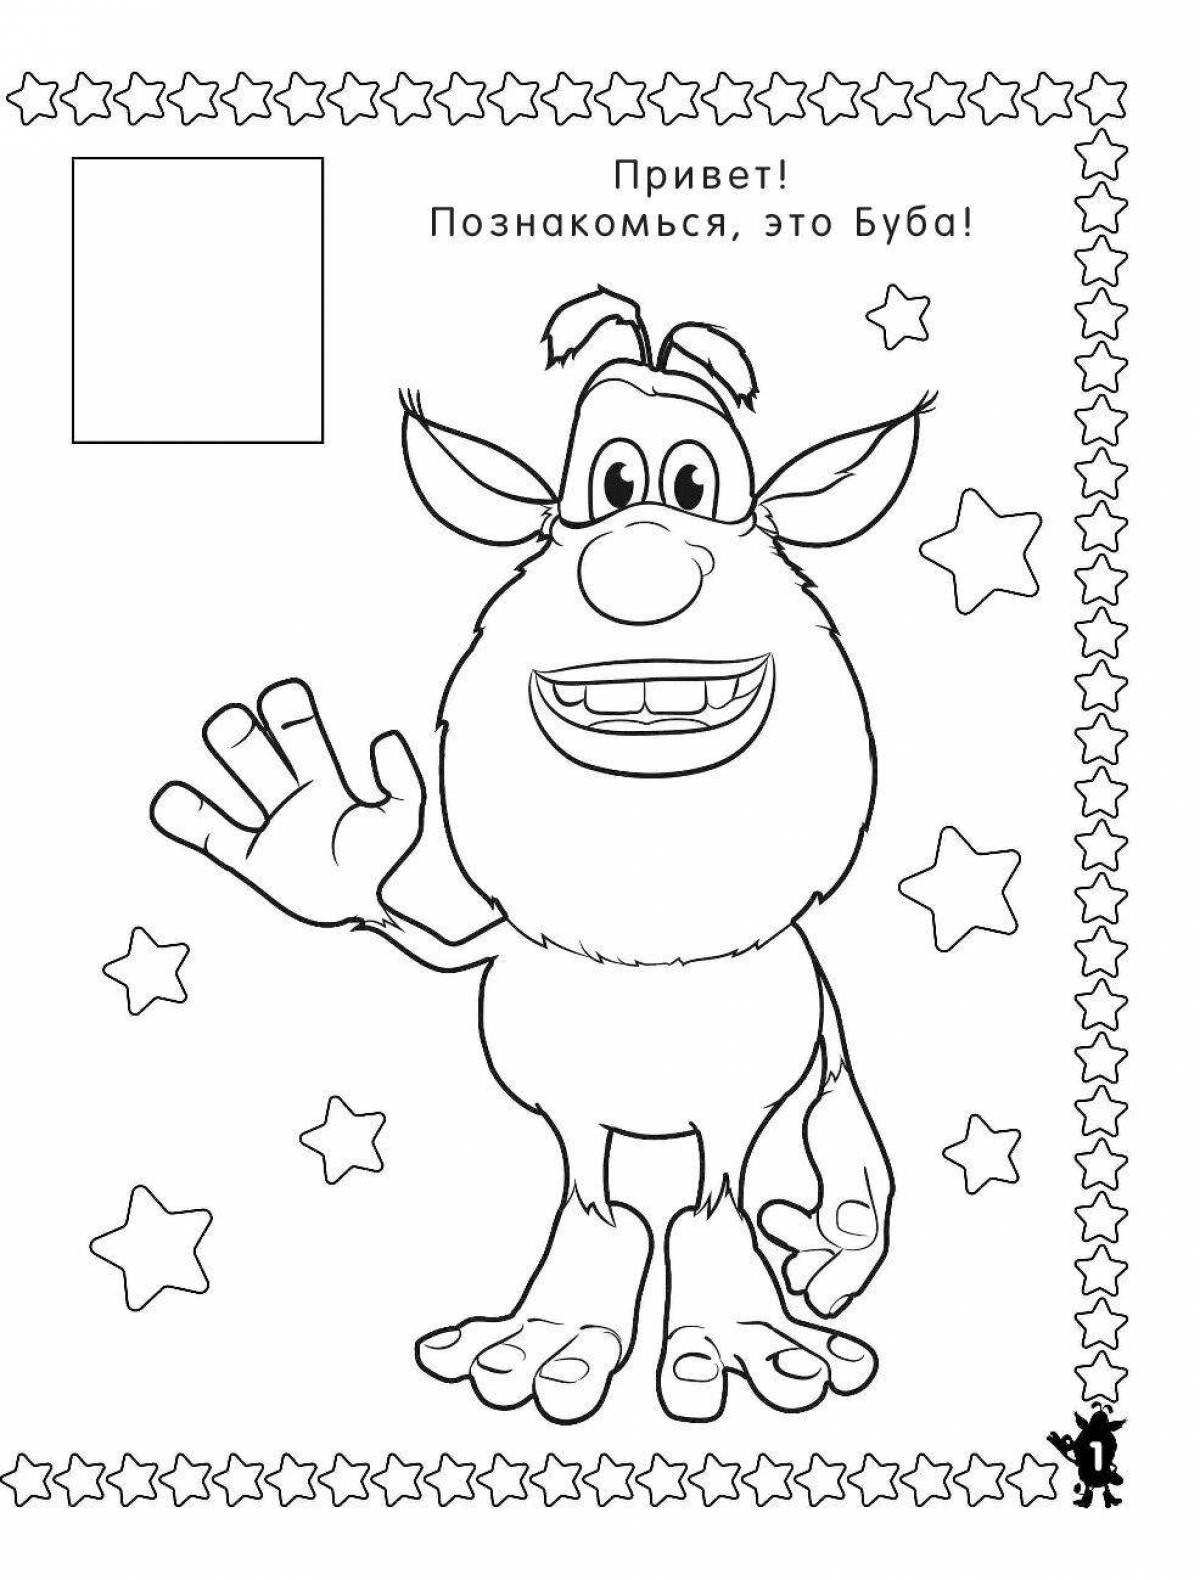 Delightful buba coloring book for kids